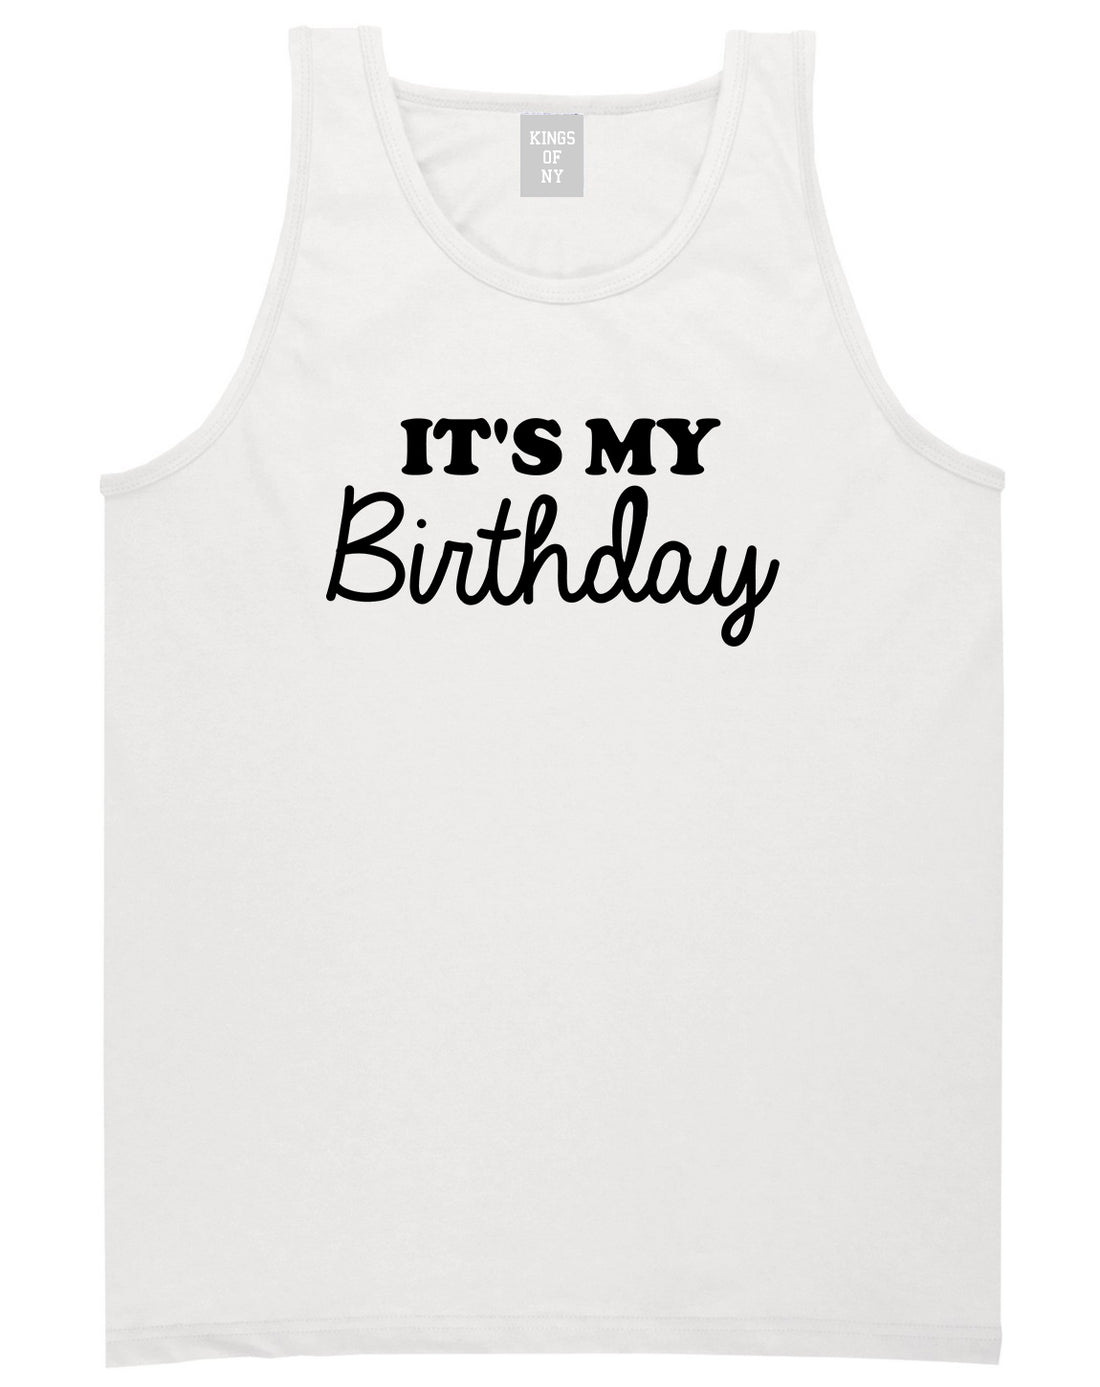 Its My Birthday Mens Tank Top T-Shirt White